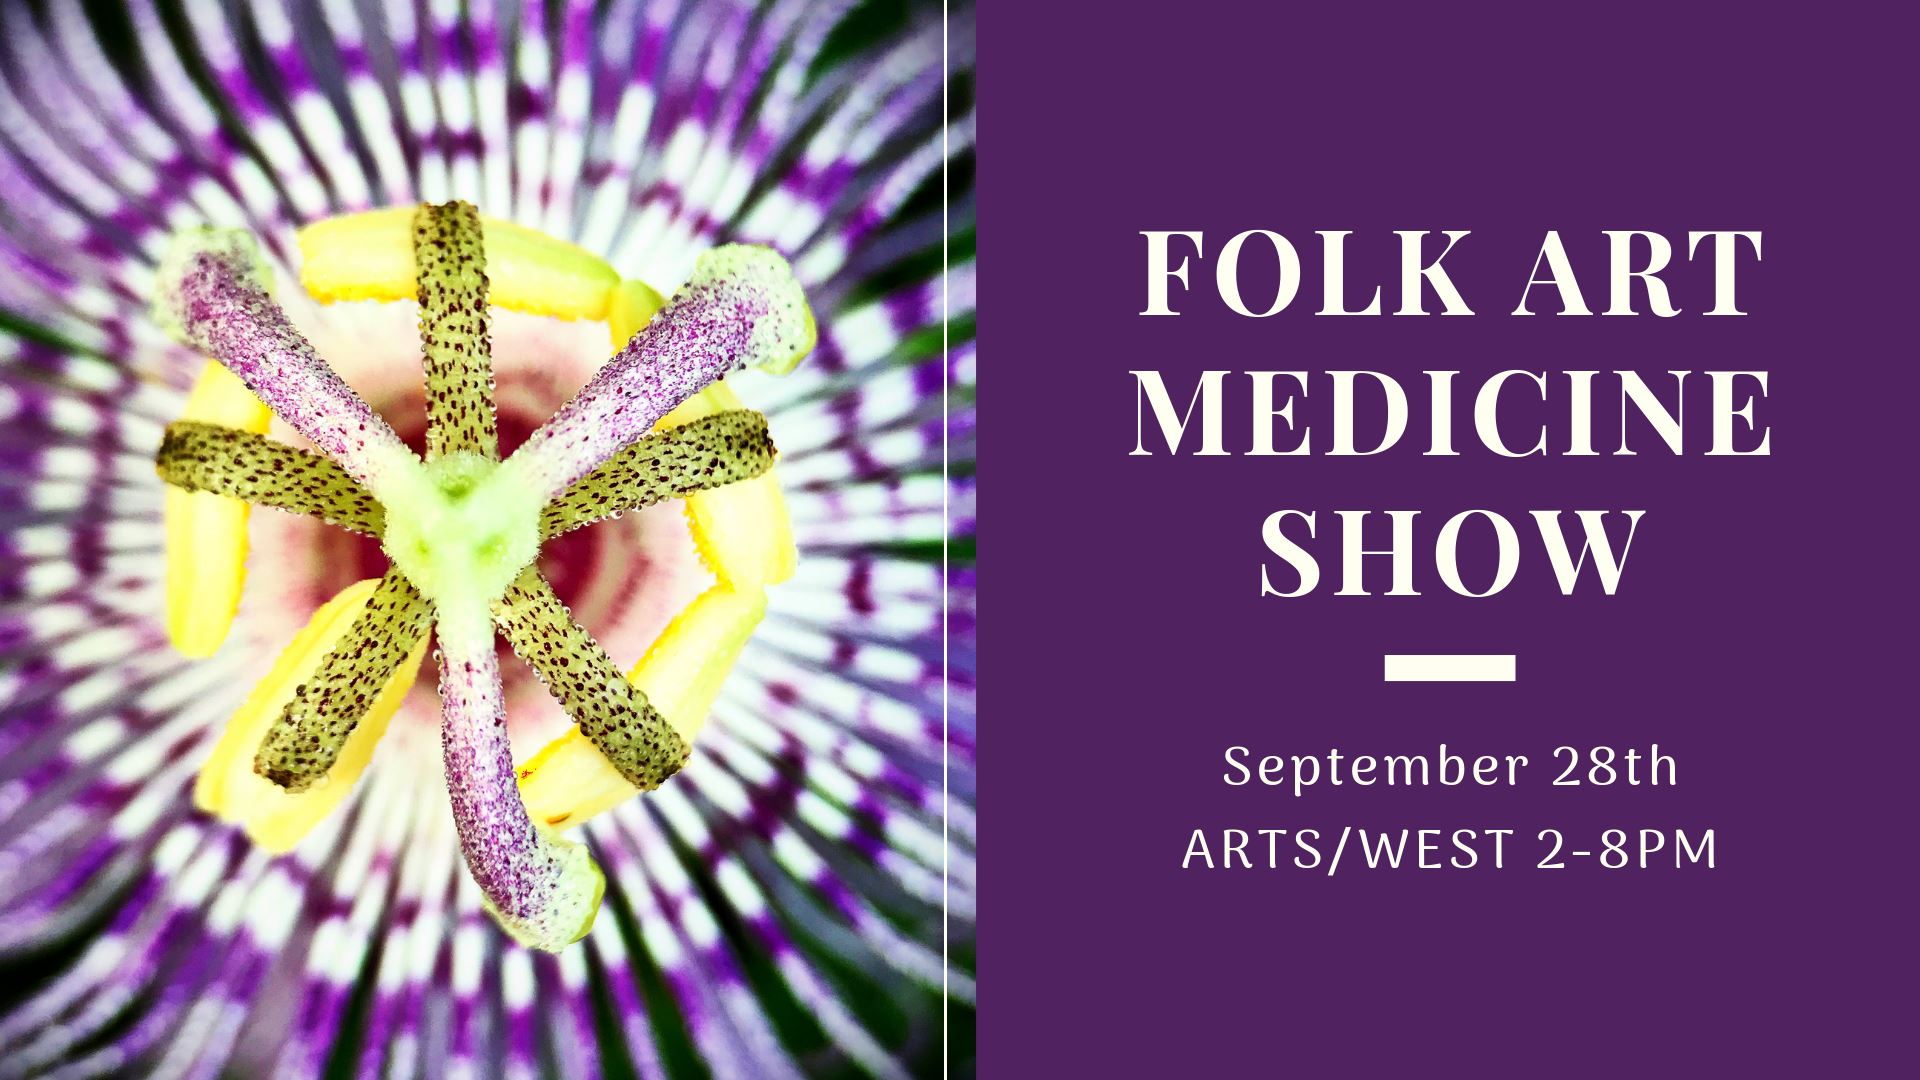 Folk Art Medicine Show flier